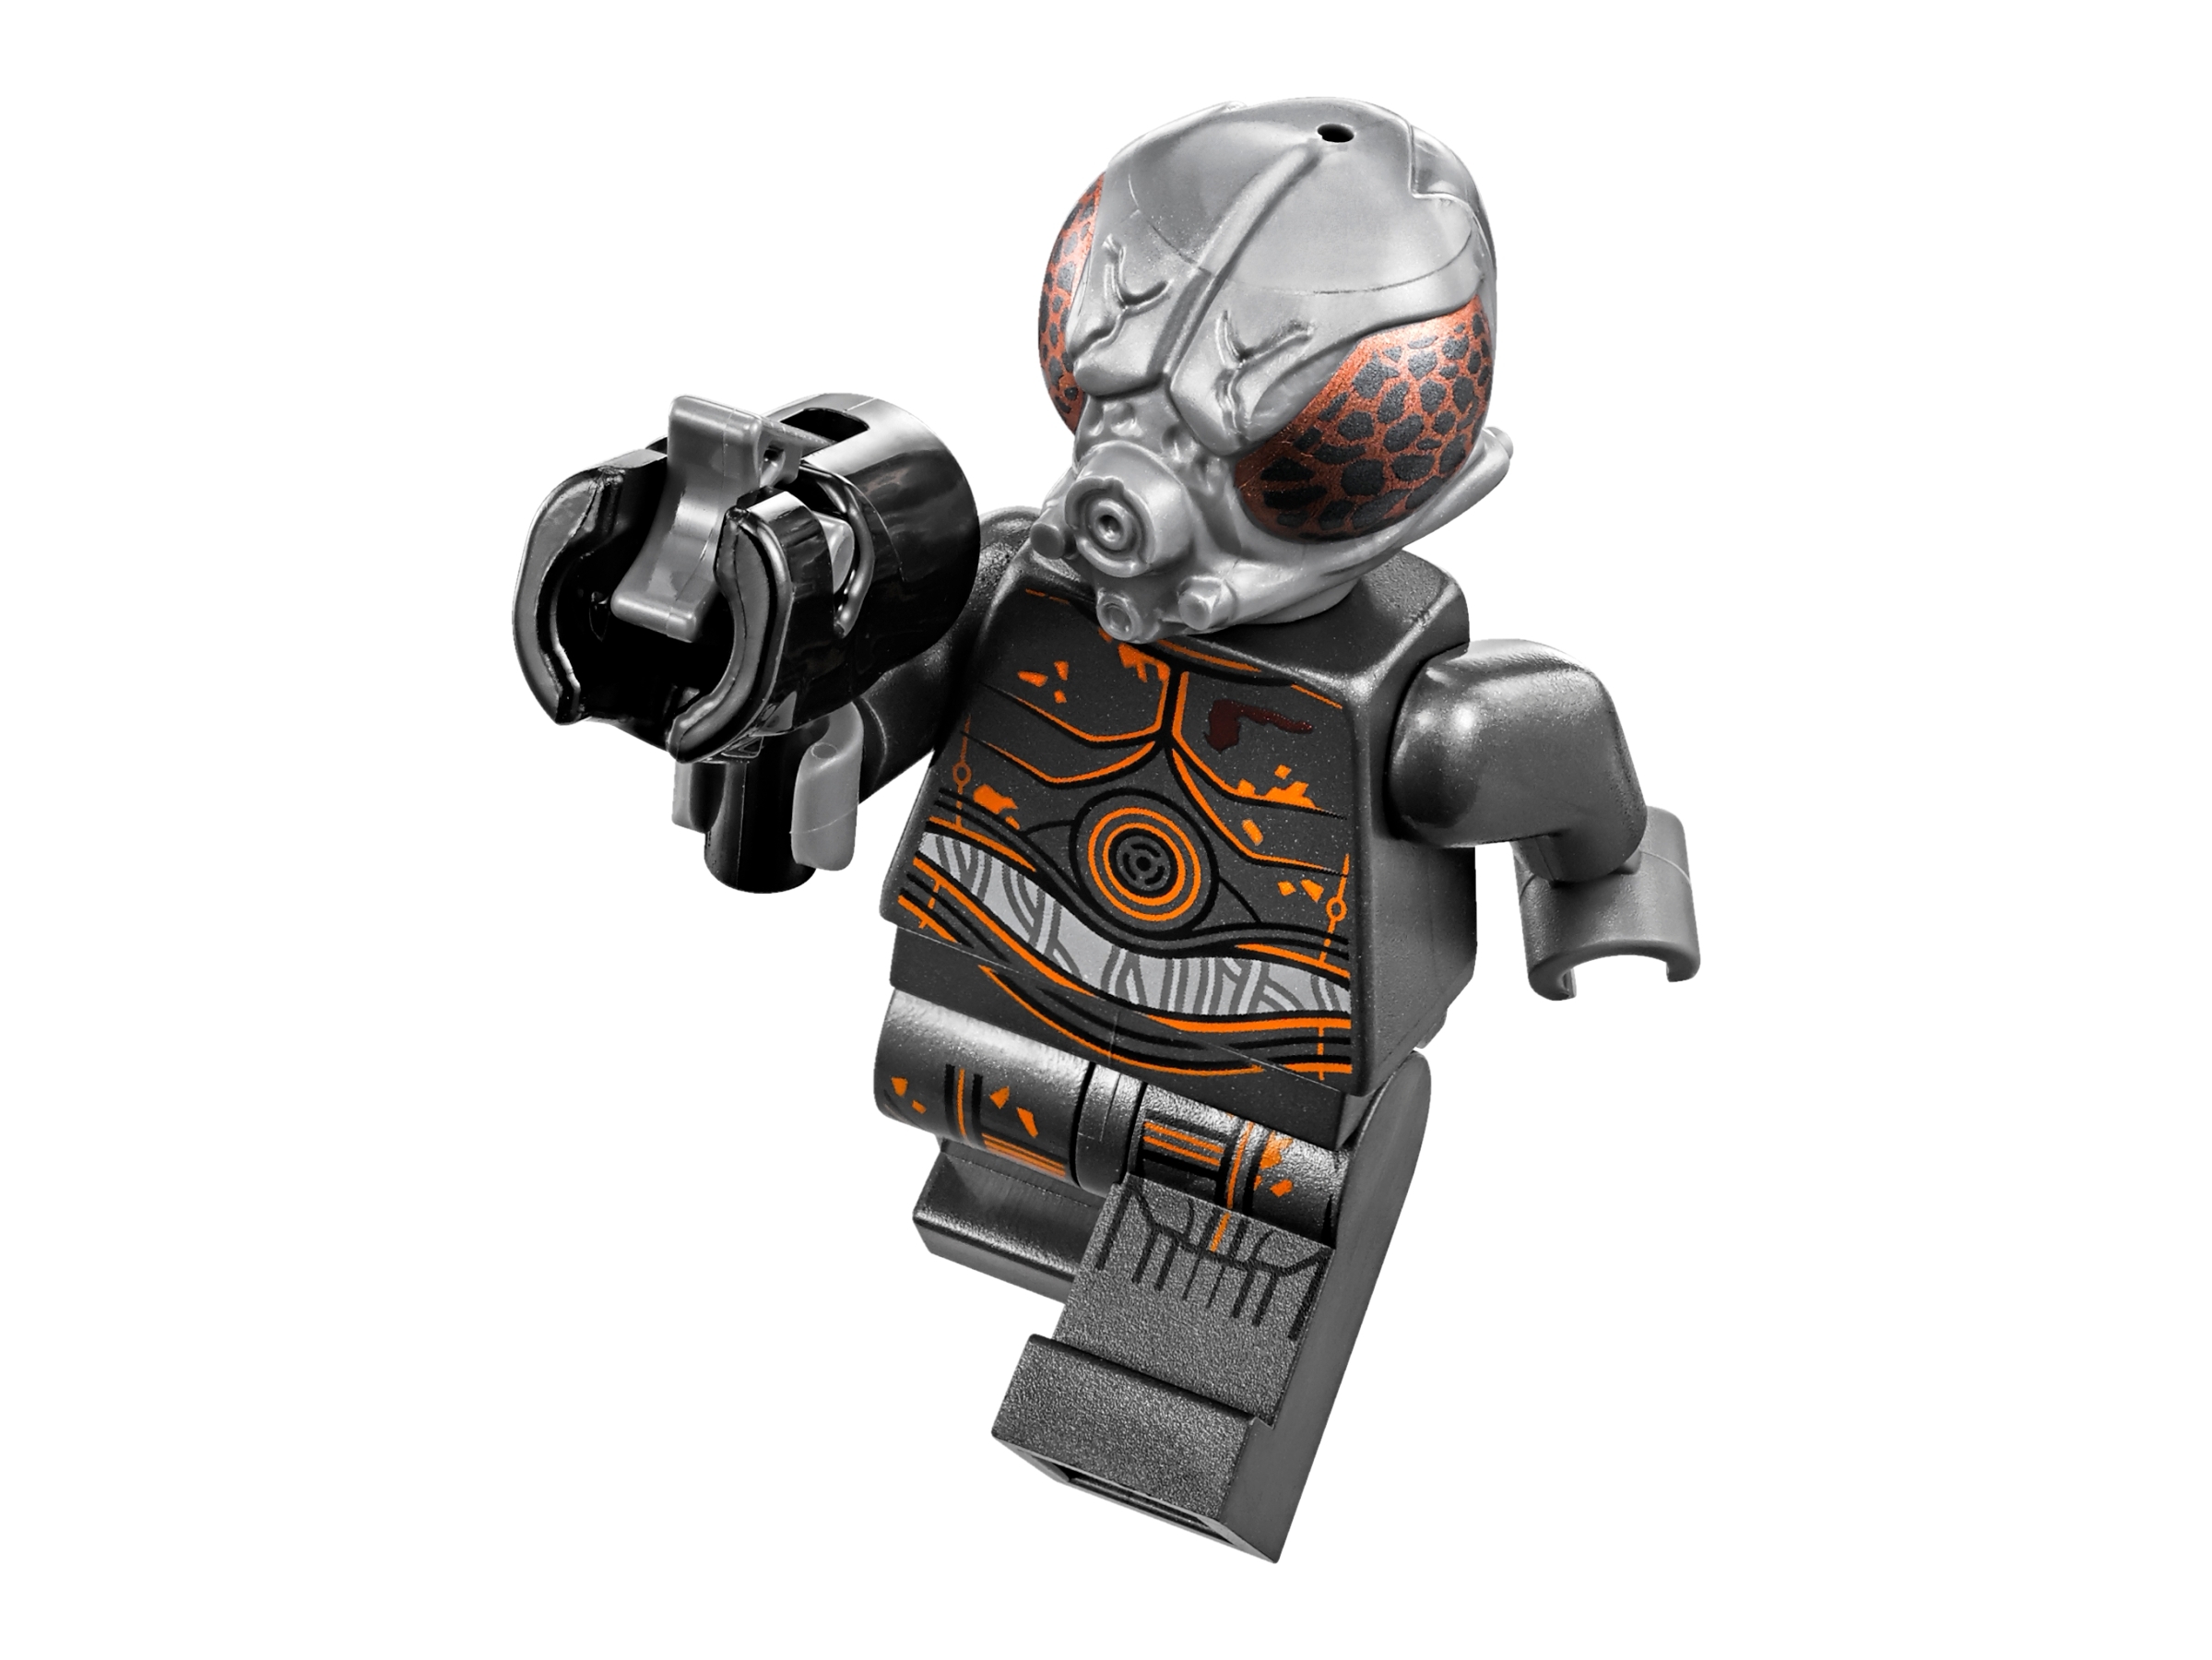 Lego® Star Wars Minifigur Dengar mit Jetpack aus Set 75167 Neu